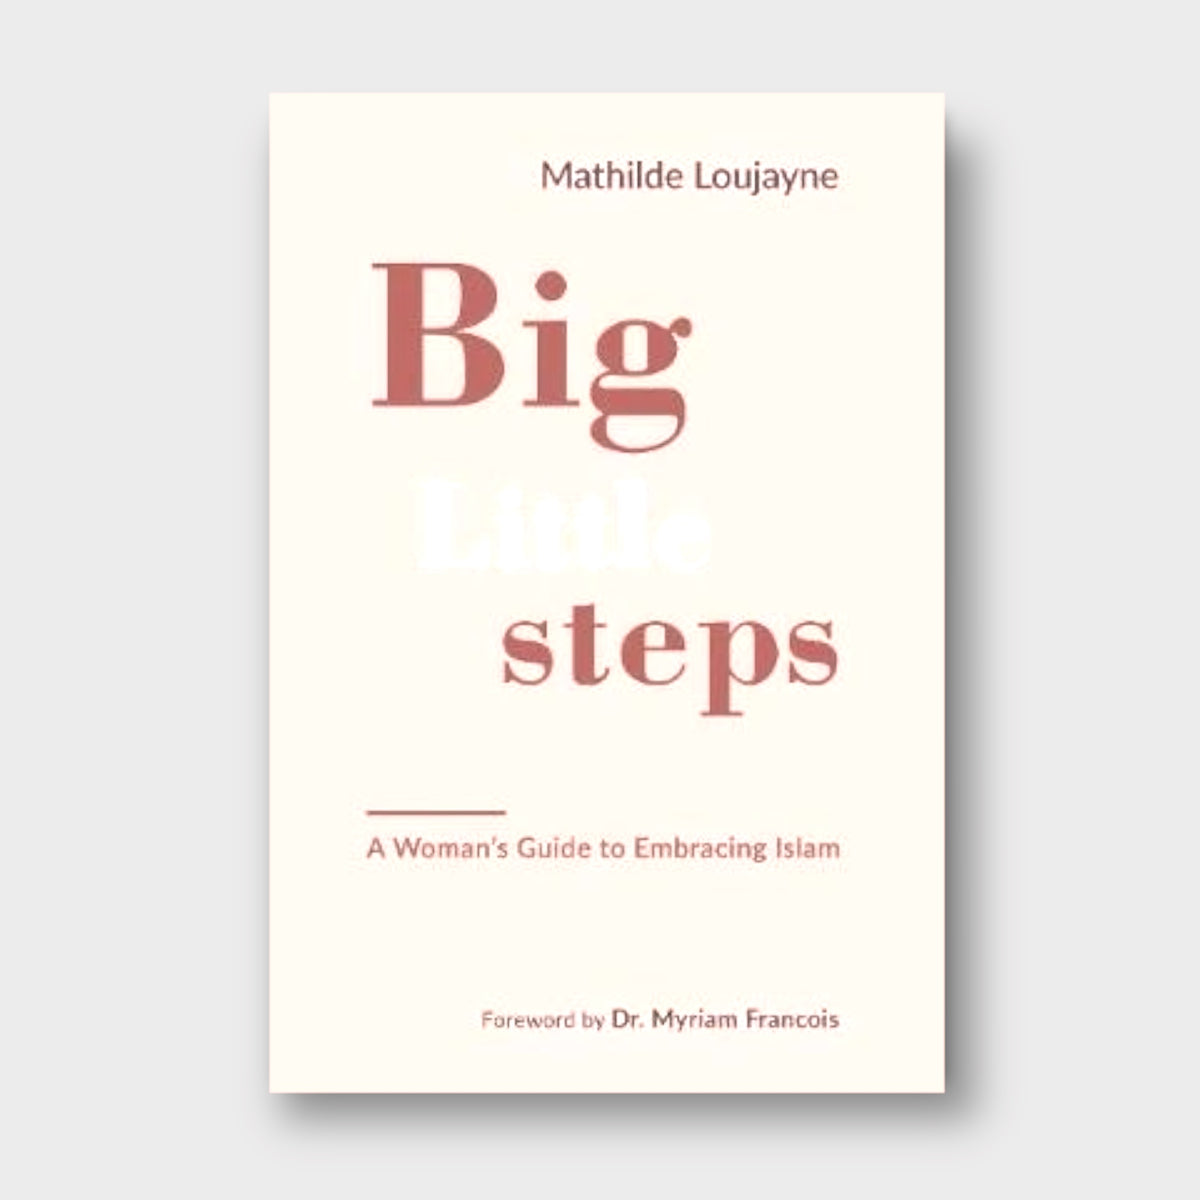 Big Little Steps